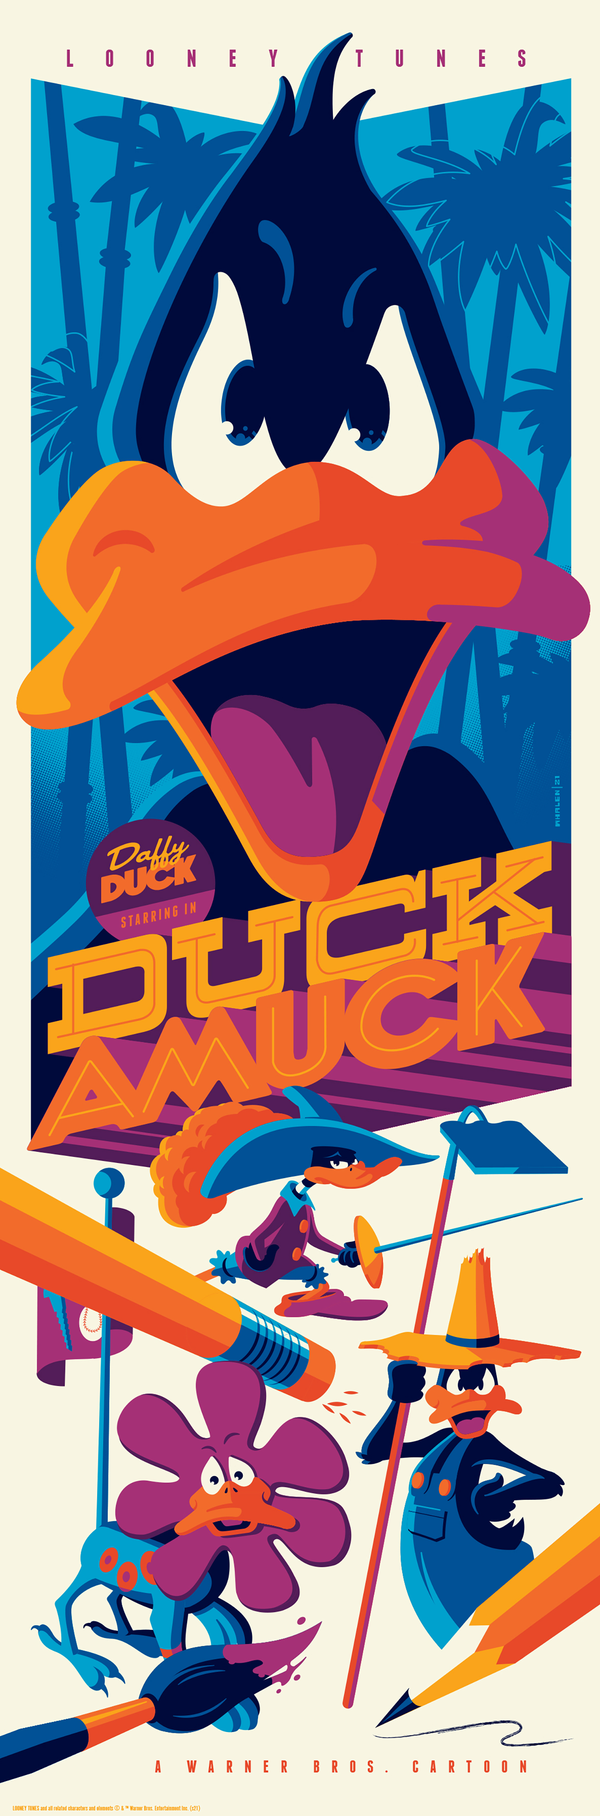 Duck Amuck Daffy (Looney Tunes) by Tom Whalen, 12" x 36" Screen Print